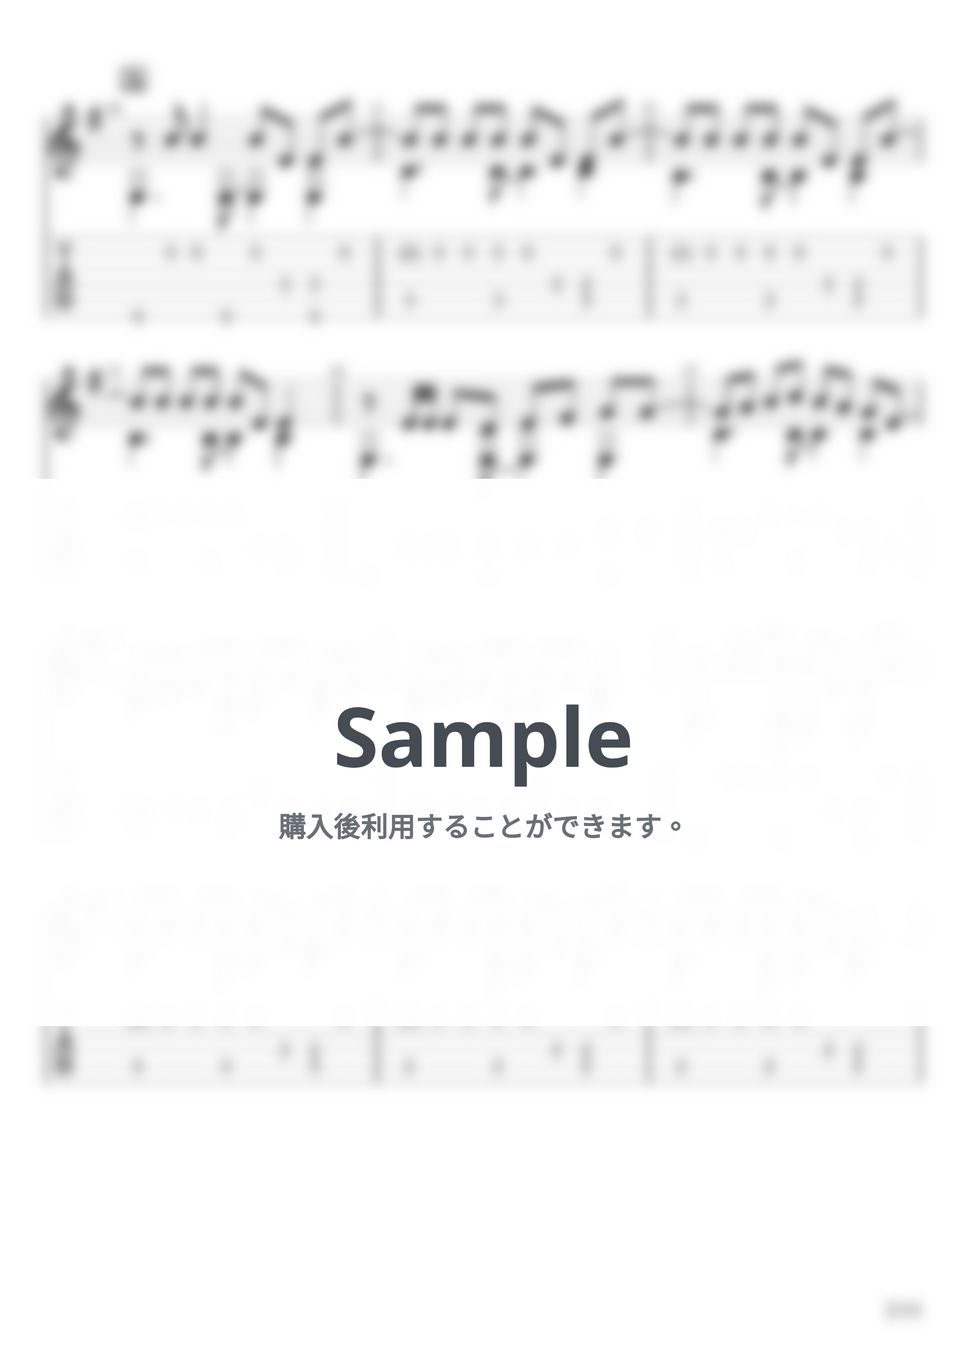 syudou - ビターチョコデコレーション (ソロギター) by u3danchou